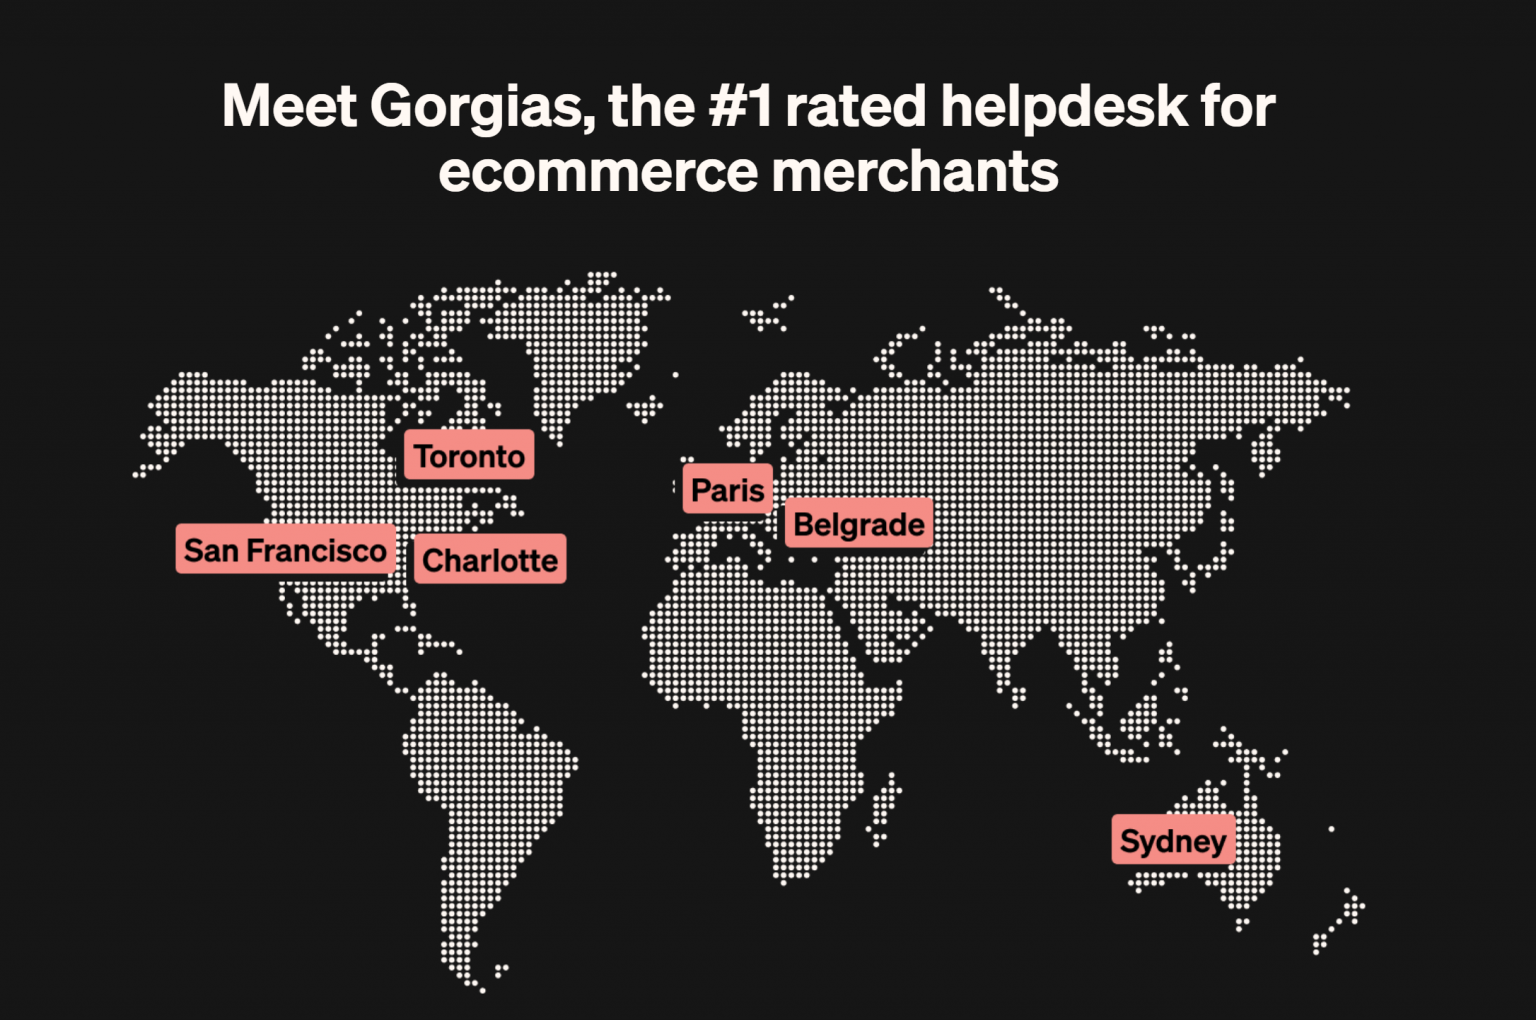 Gorgias helpdesk for ecommerce merchants